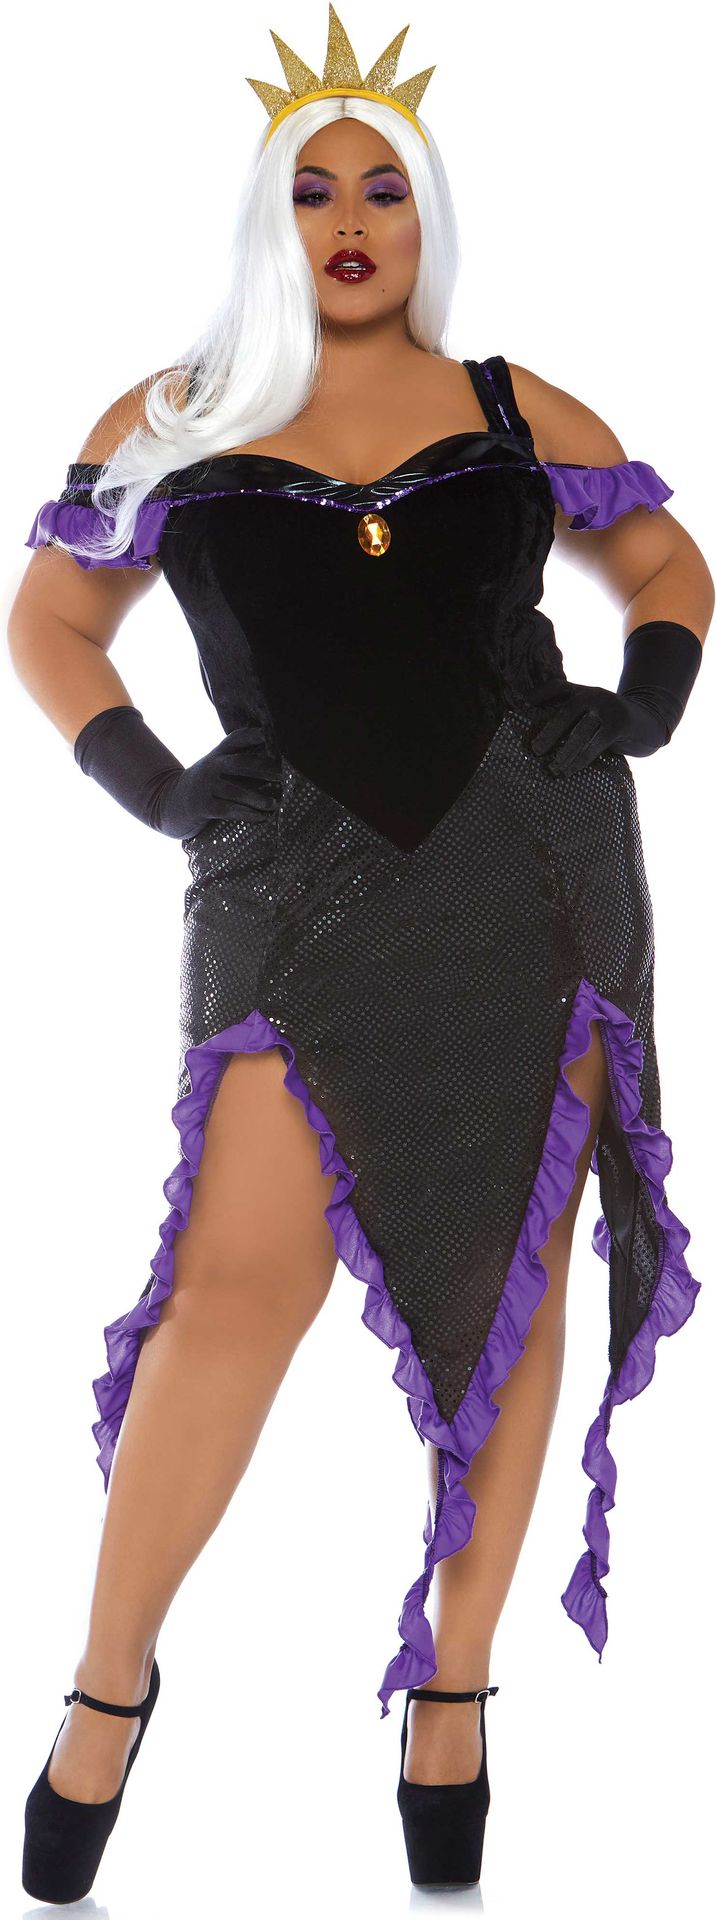 Disney zeekheks Ursula jurk